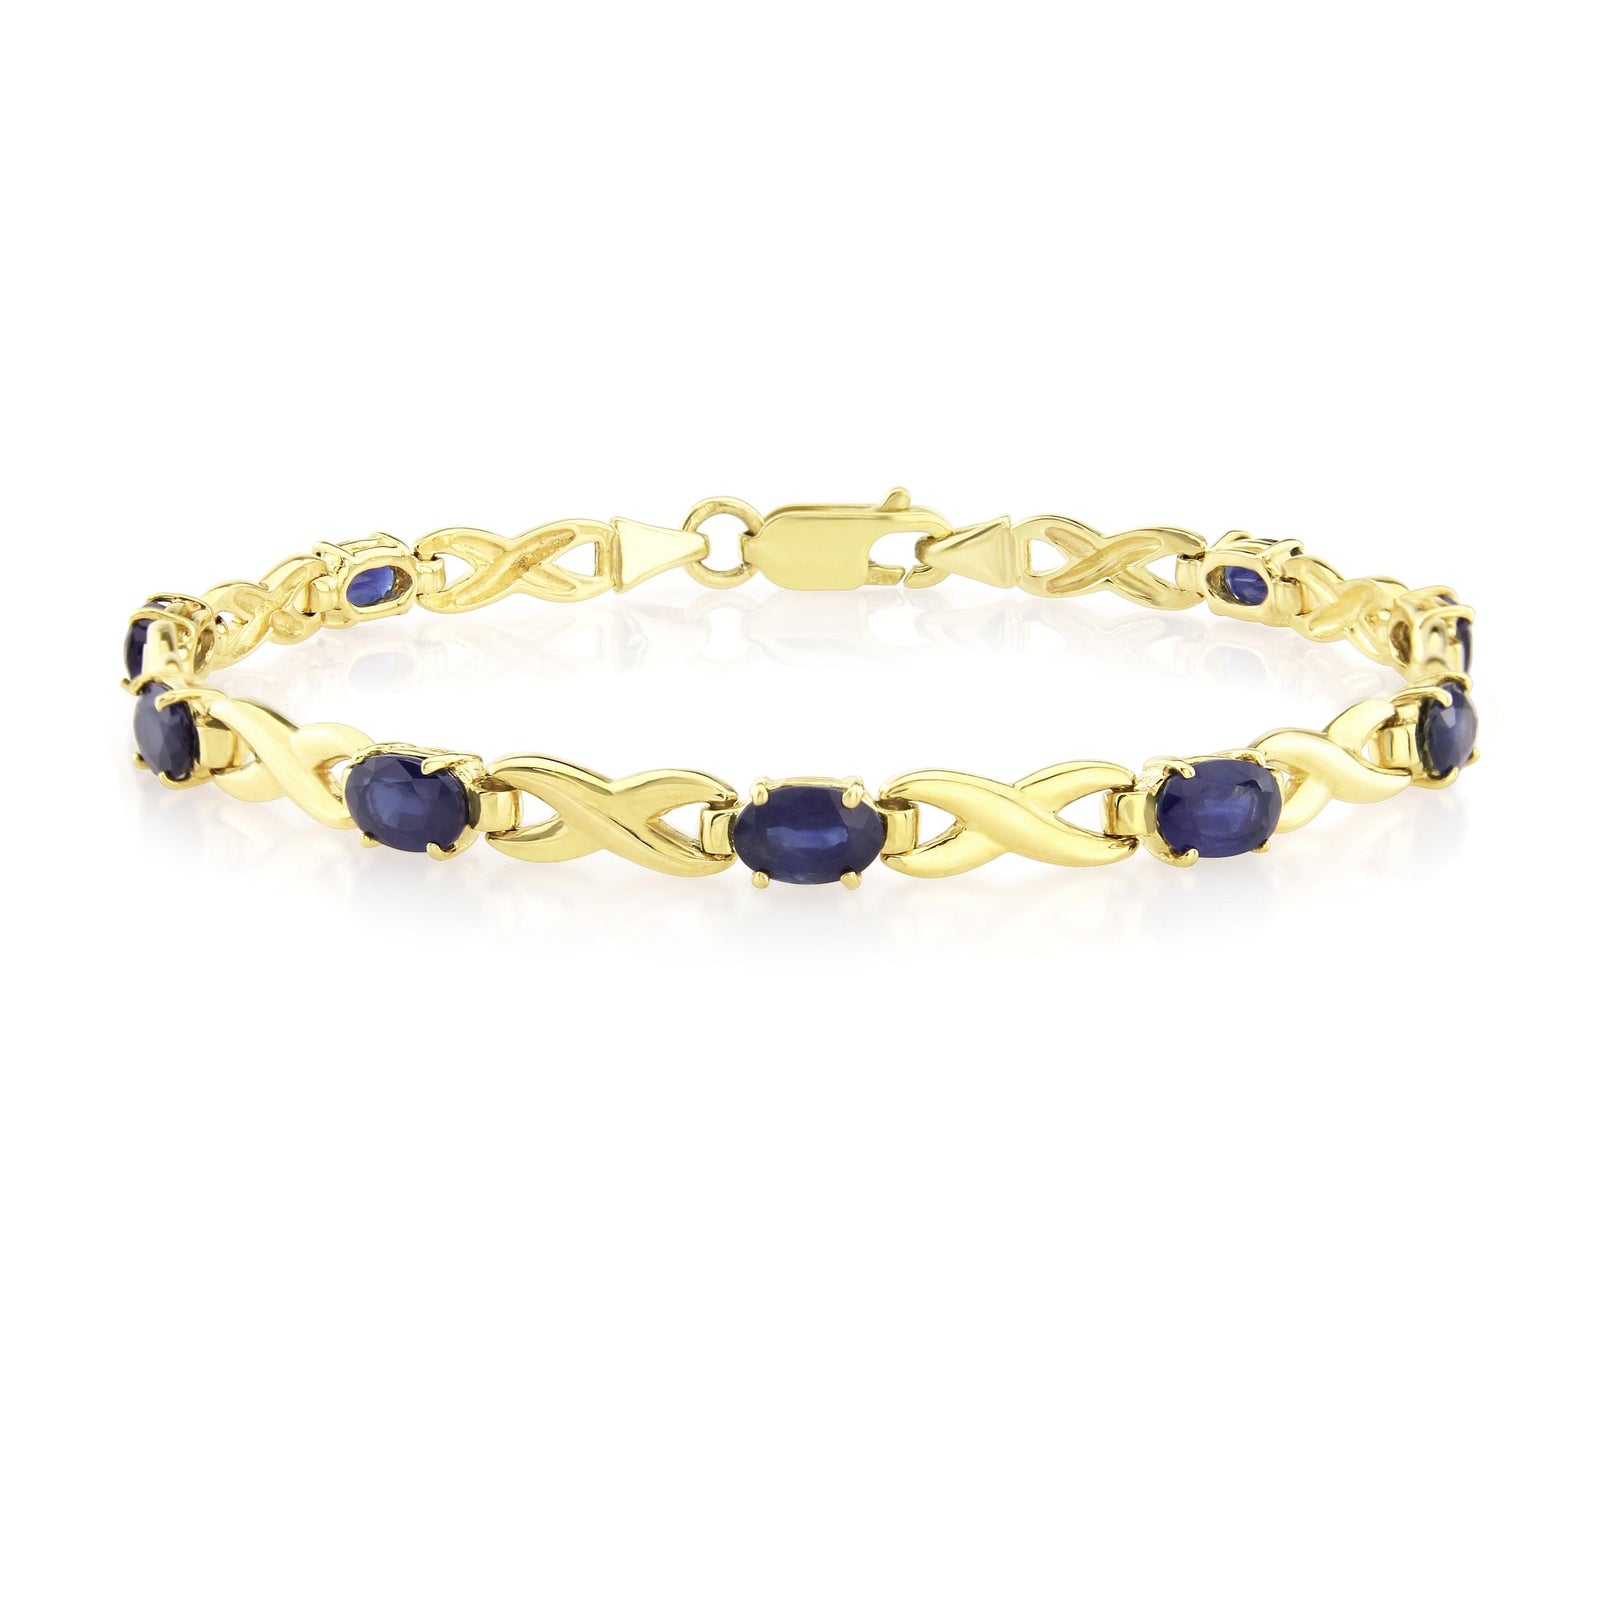 9ct gold 6x4mm oval sapphire bracelet